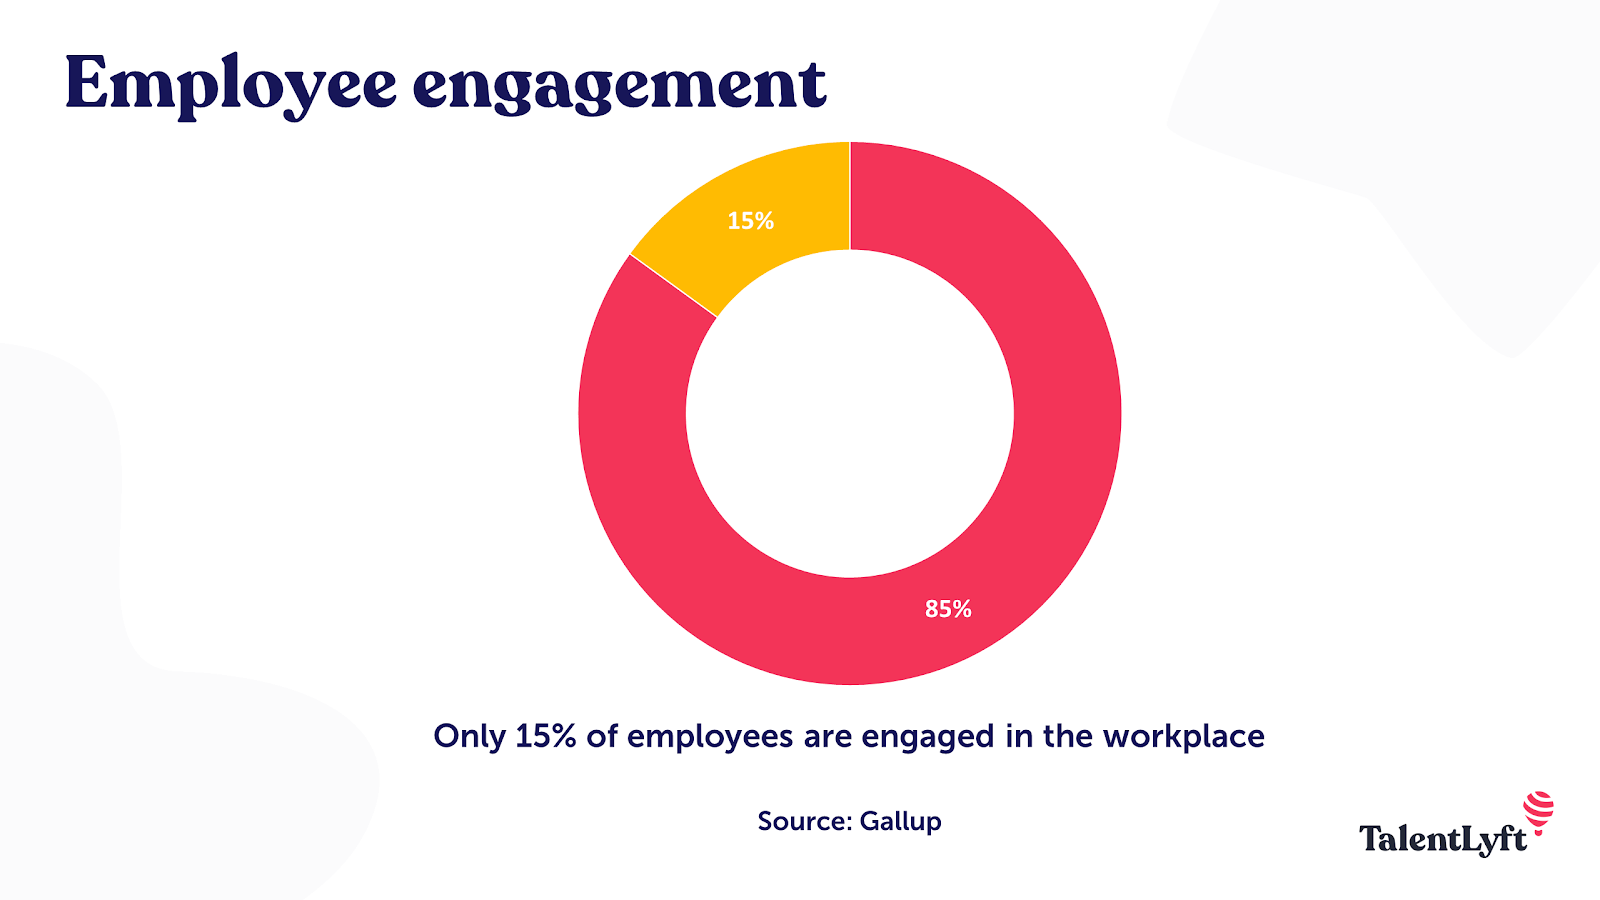 Employee engagement